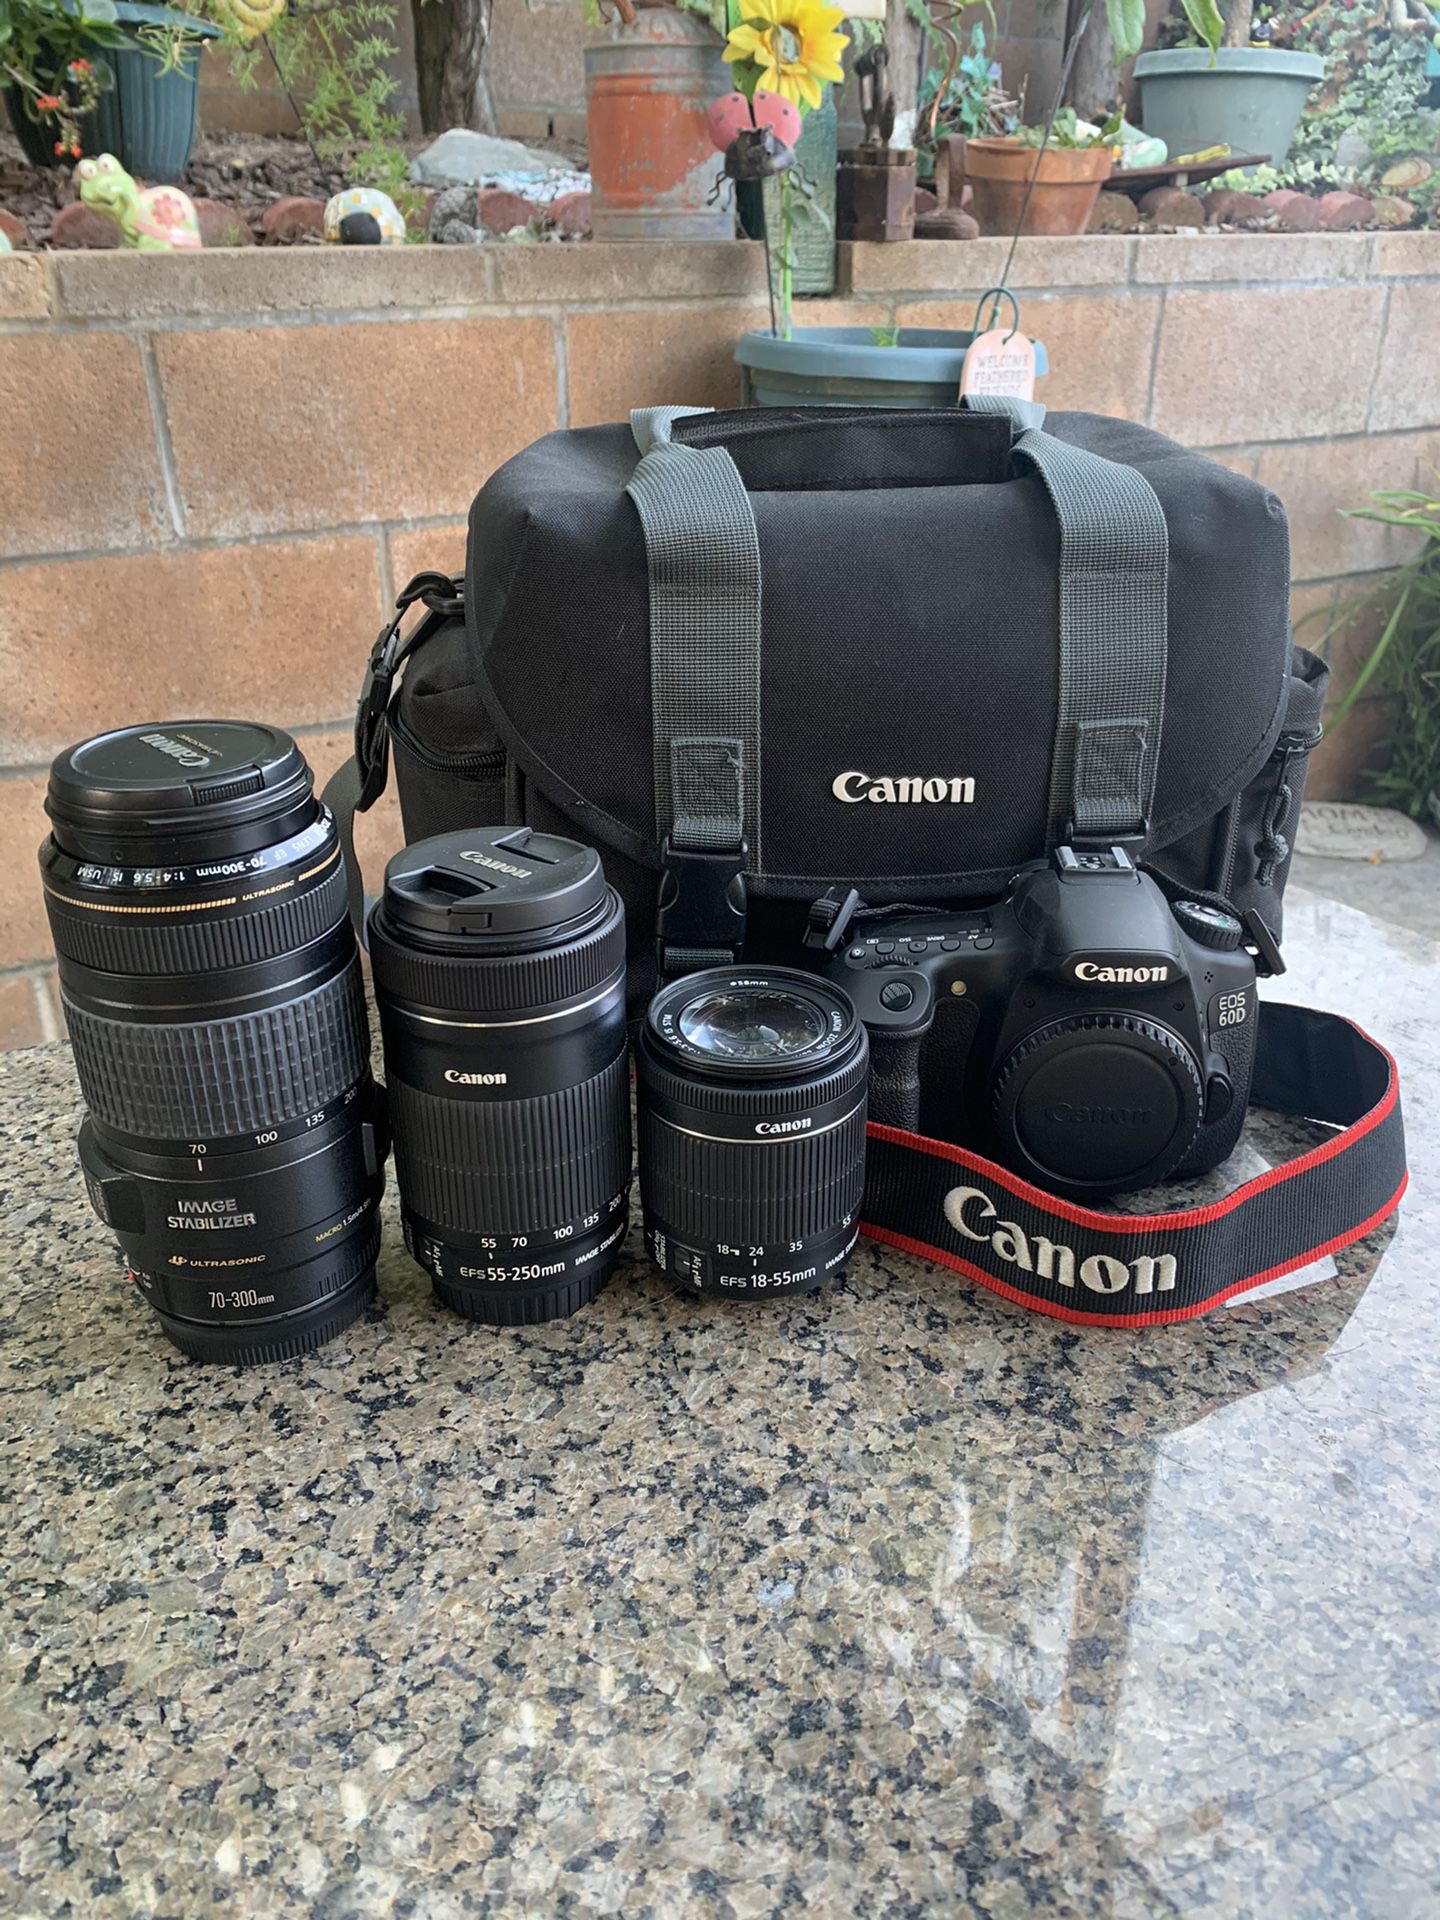 Canon 60d Digital SLR camera